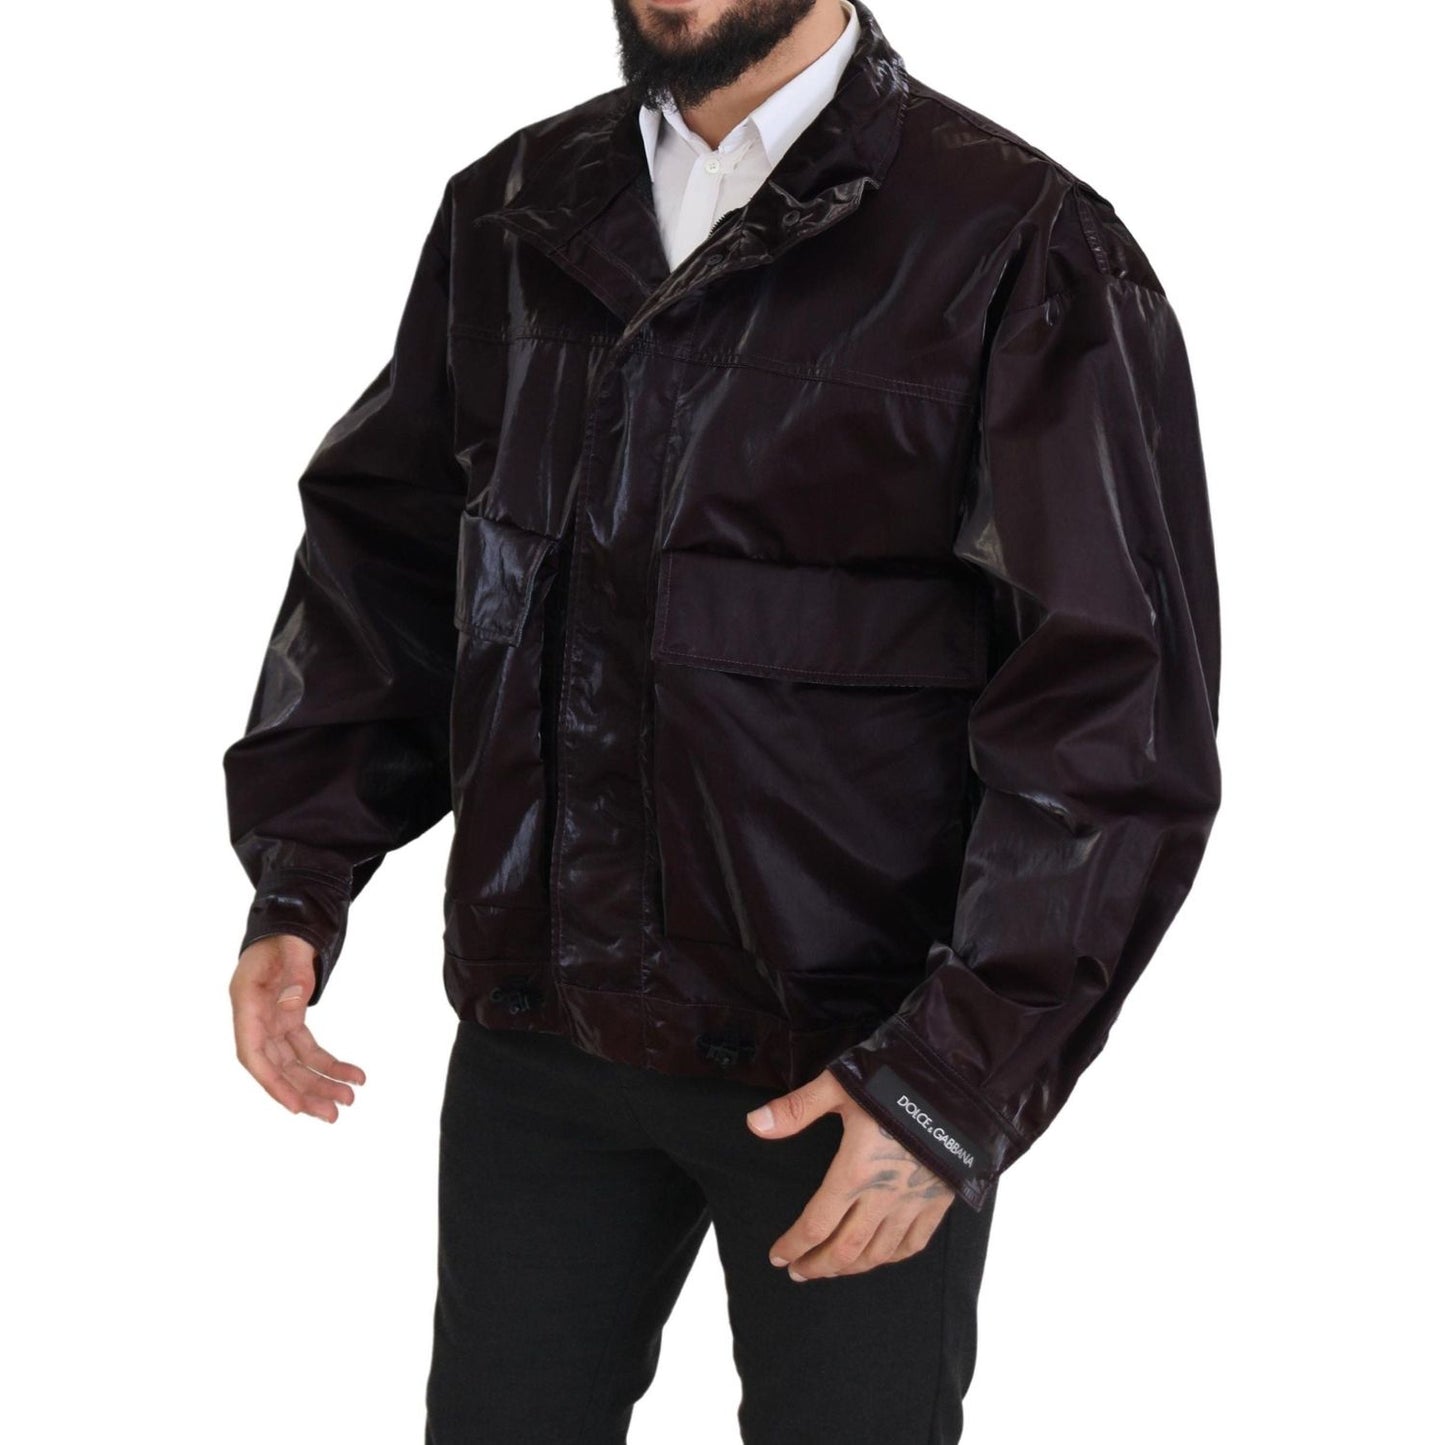 Dolce & Gabbana Elegant Bordeaux Collared Jacket bordeaux-nylon-collared-men-coat-jacket IMG_8277-b2293498-ed6.jpg